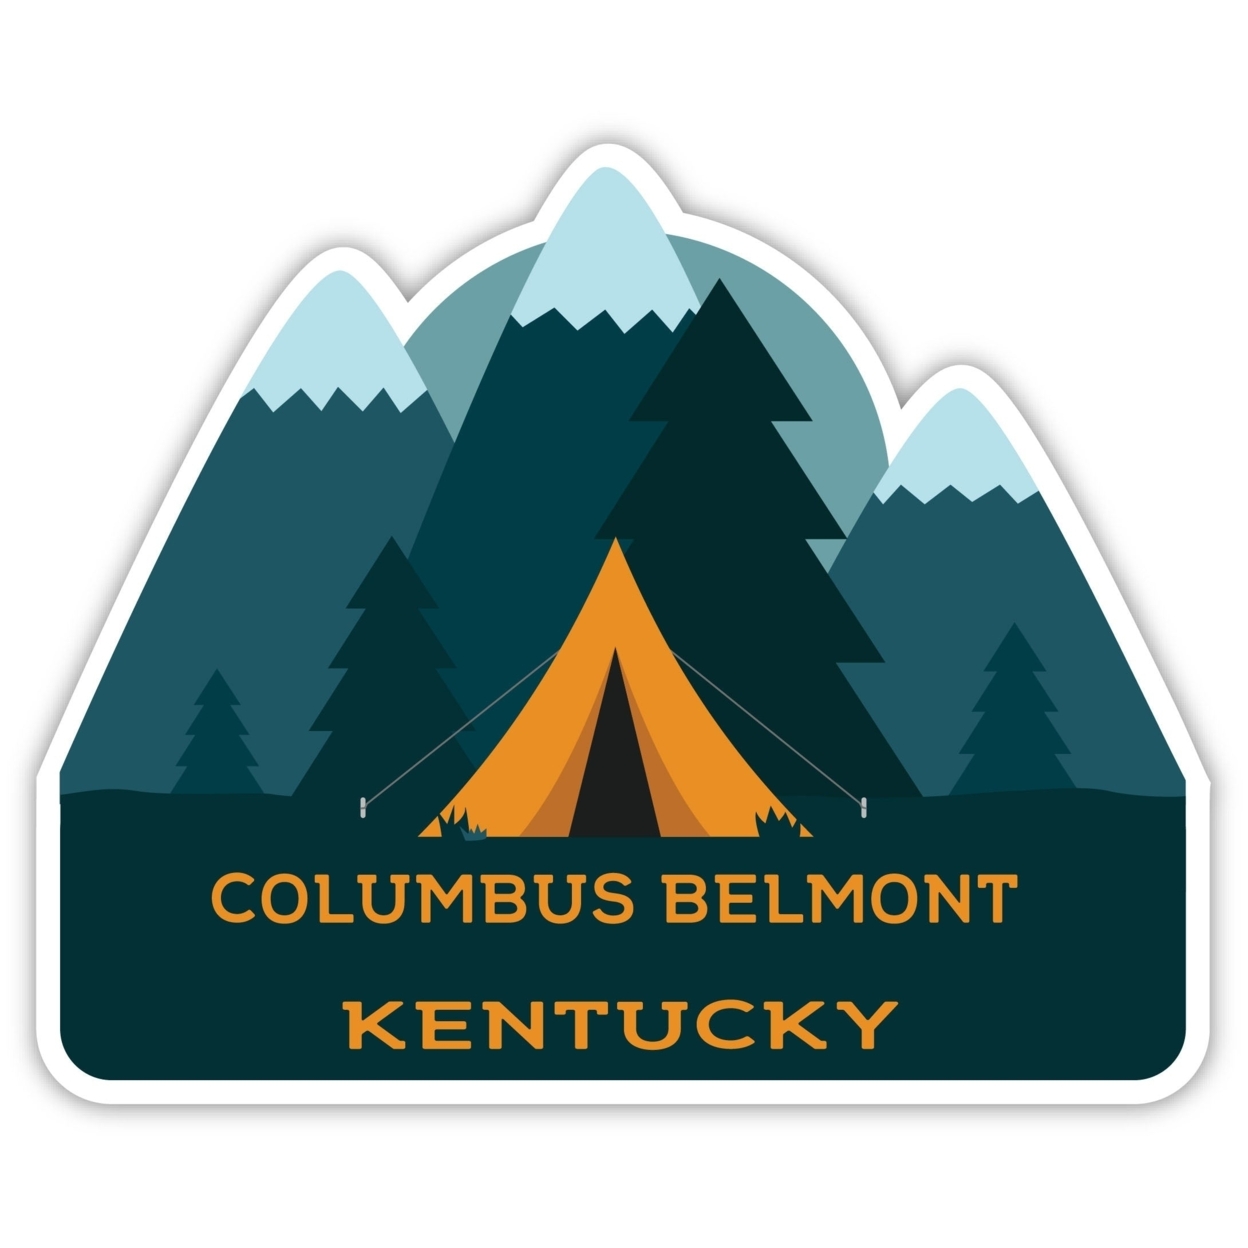 Columbus Belmont Kentucky Souvenir Decorative Stickers (Choose Theme And Size) - 4-Pack, 4-Inch, Tent